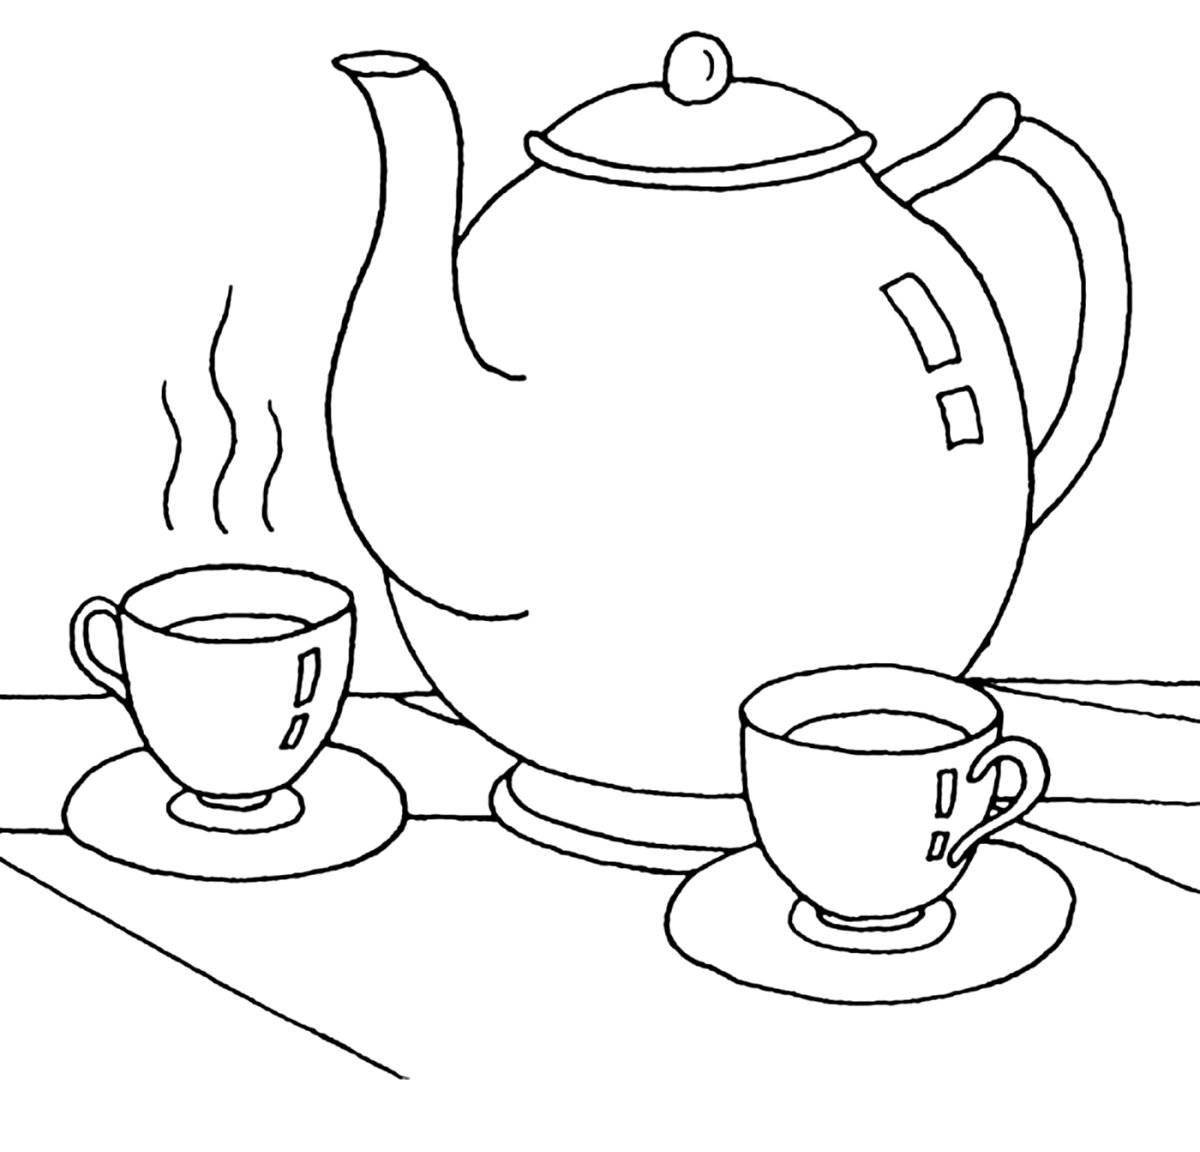 Coloring page festive teapot and mug